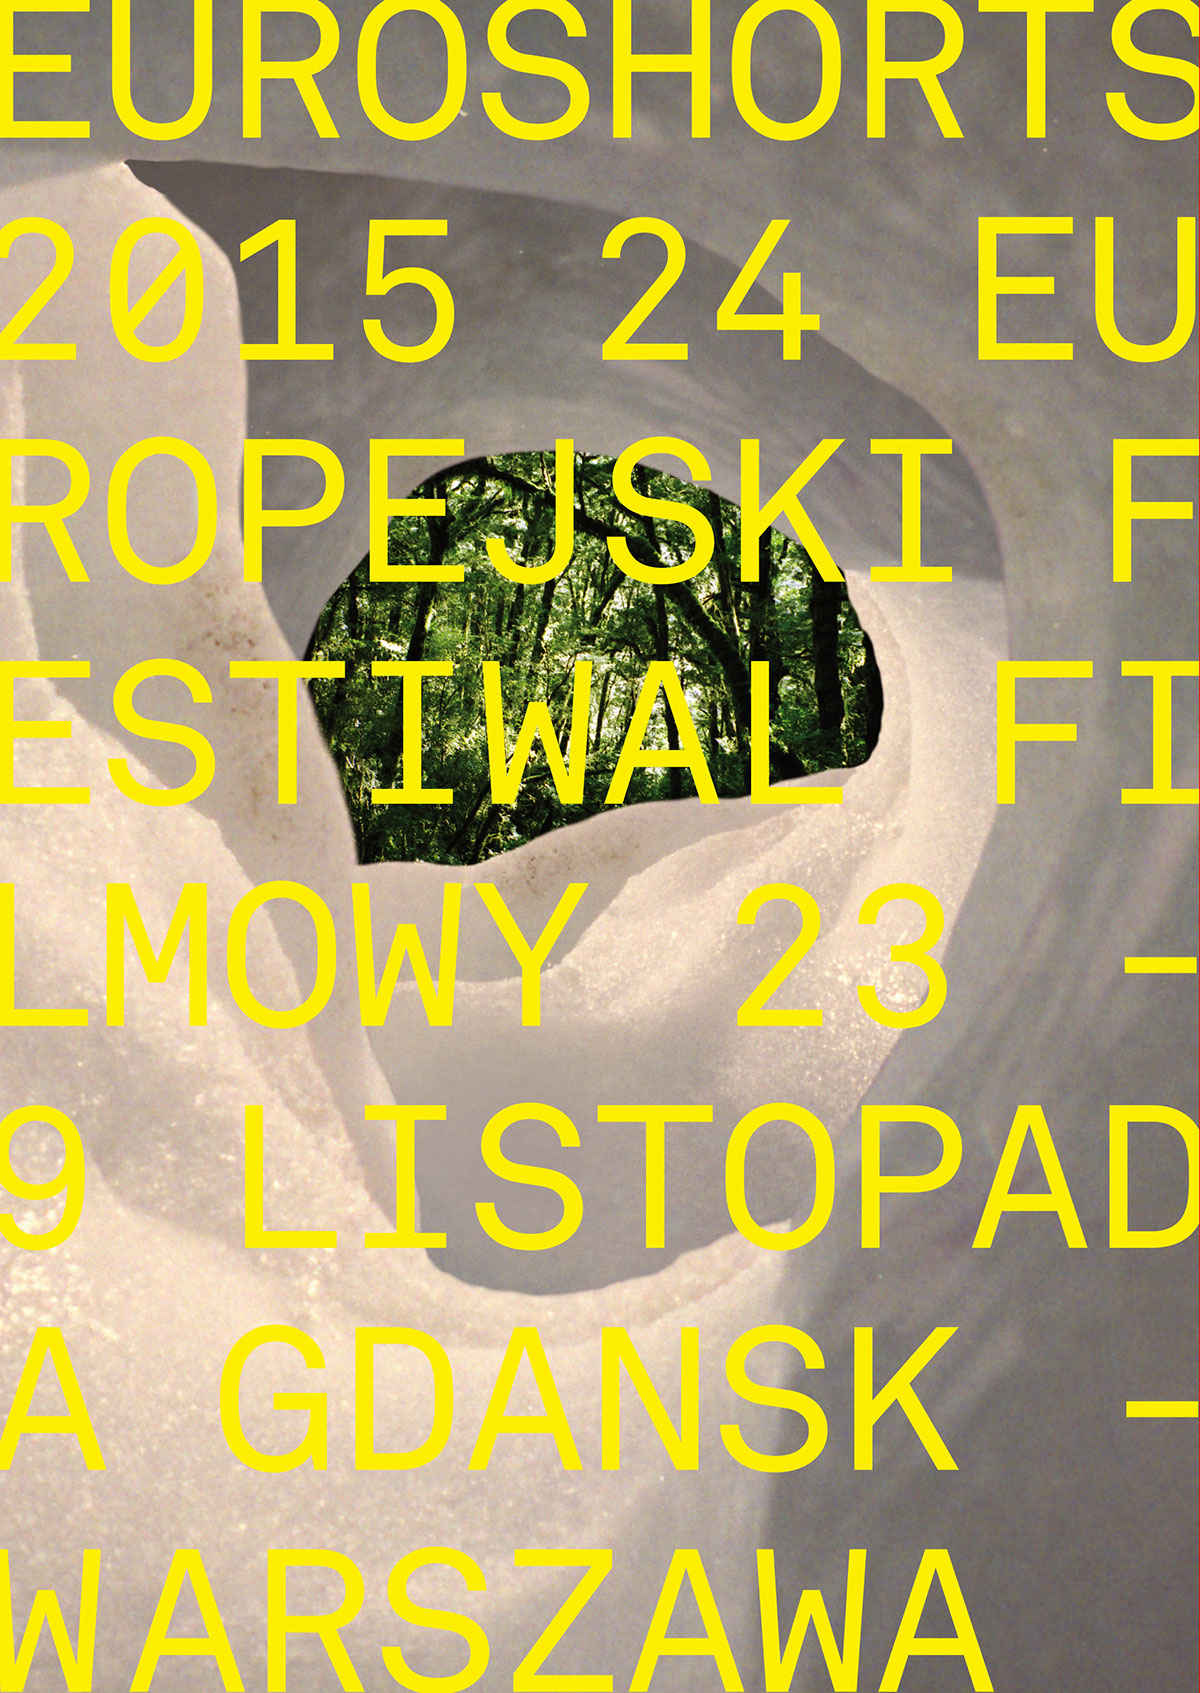 poster submission plakat film festival short film euroshorts type Competition